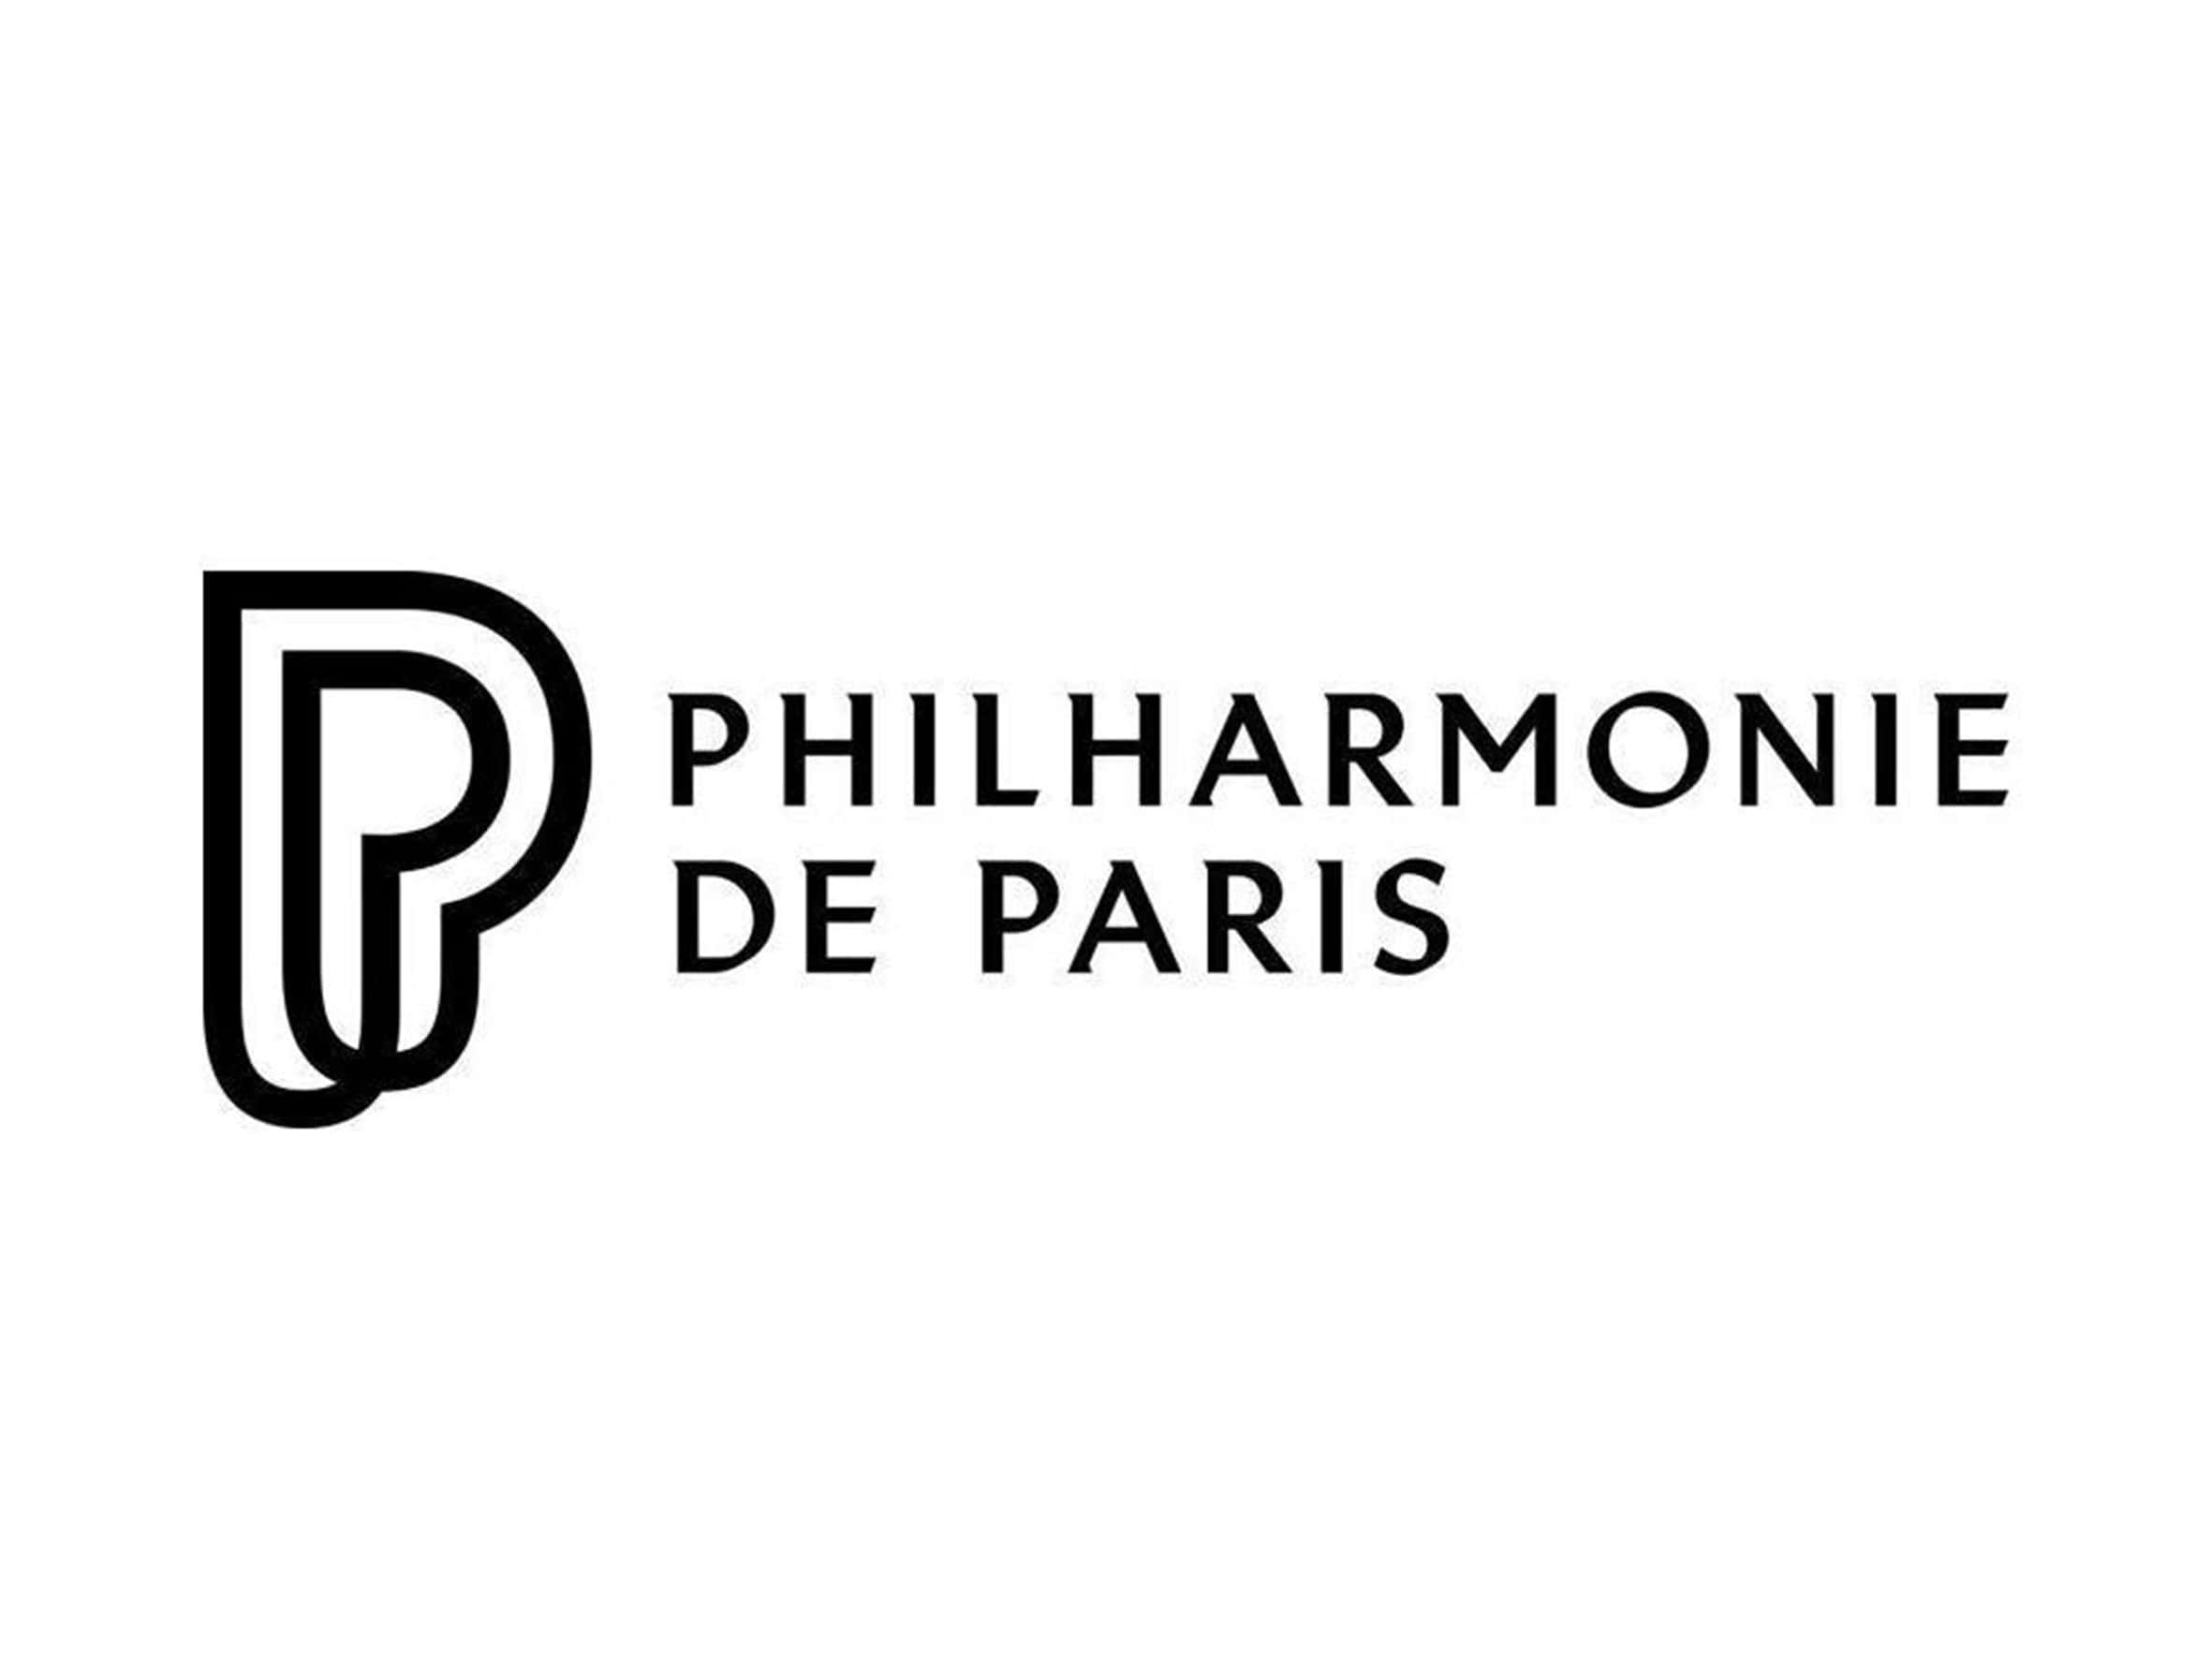 13-philharmonie-de-paris-min.jpg